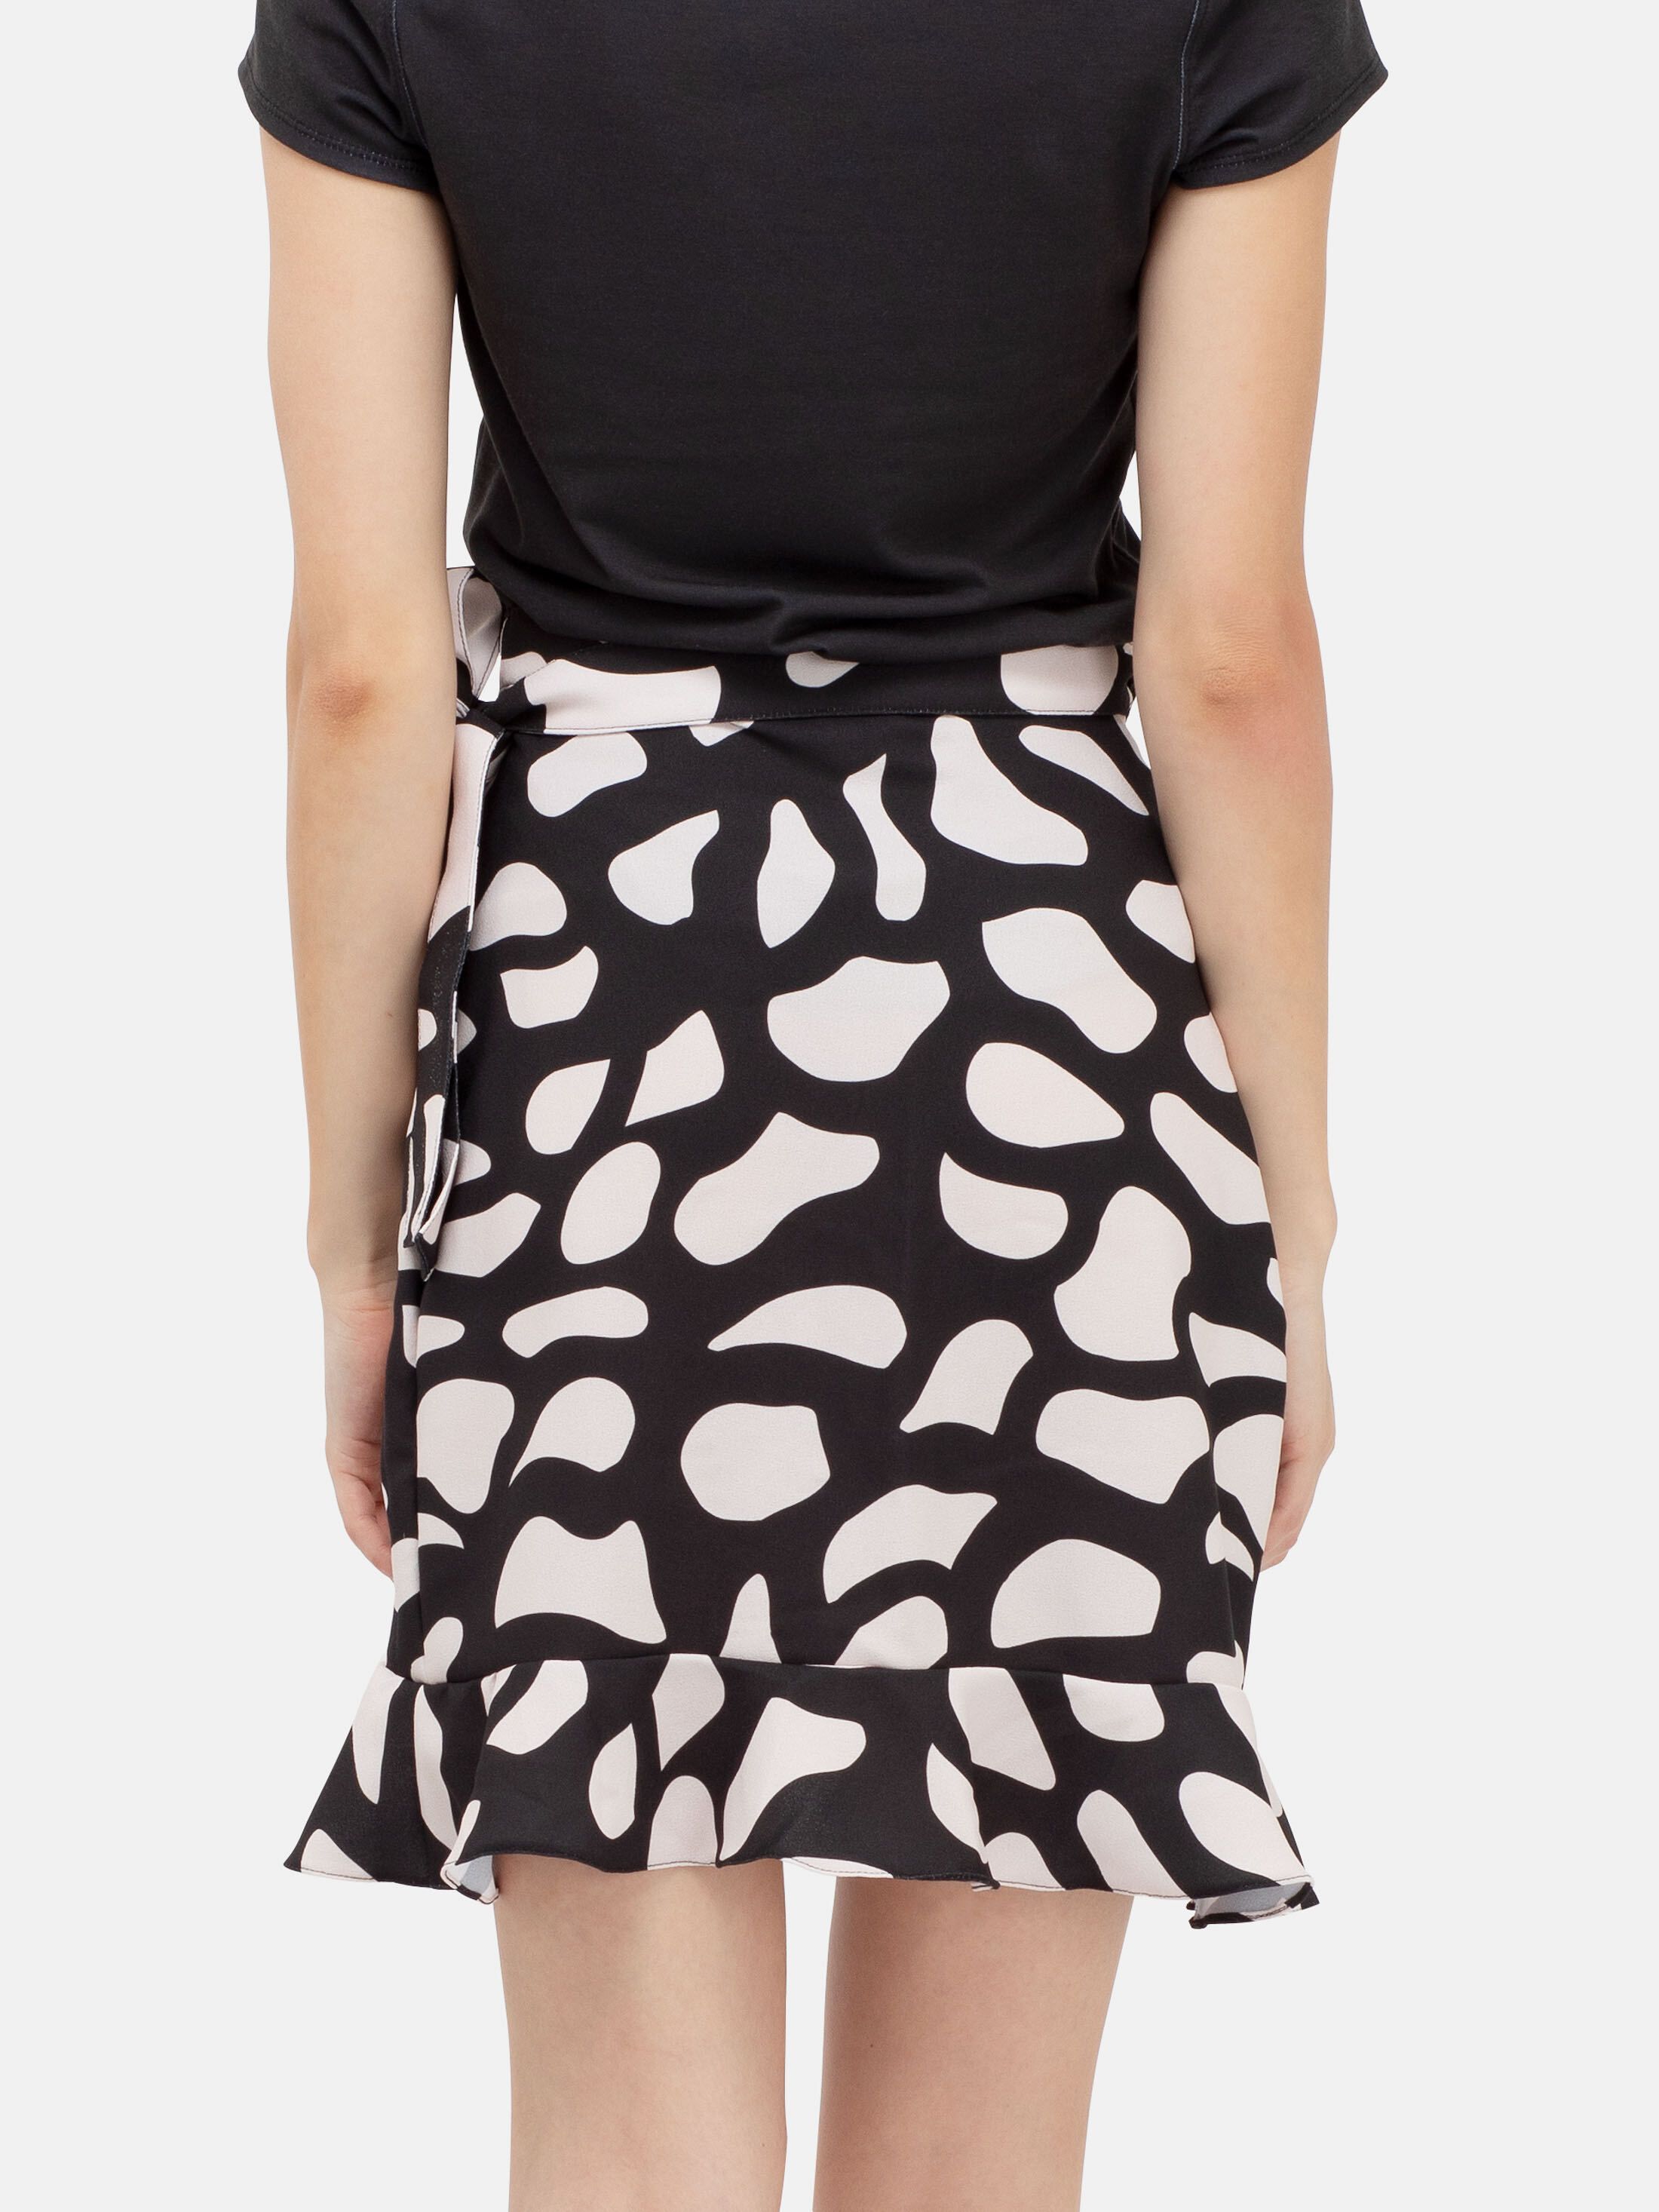 custom printed skirt with frill